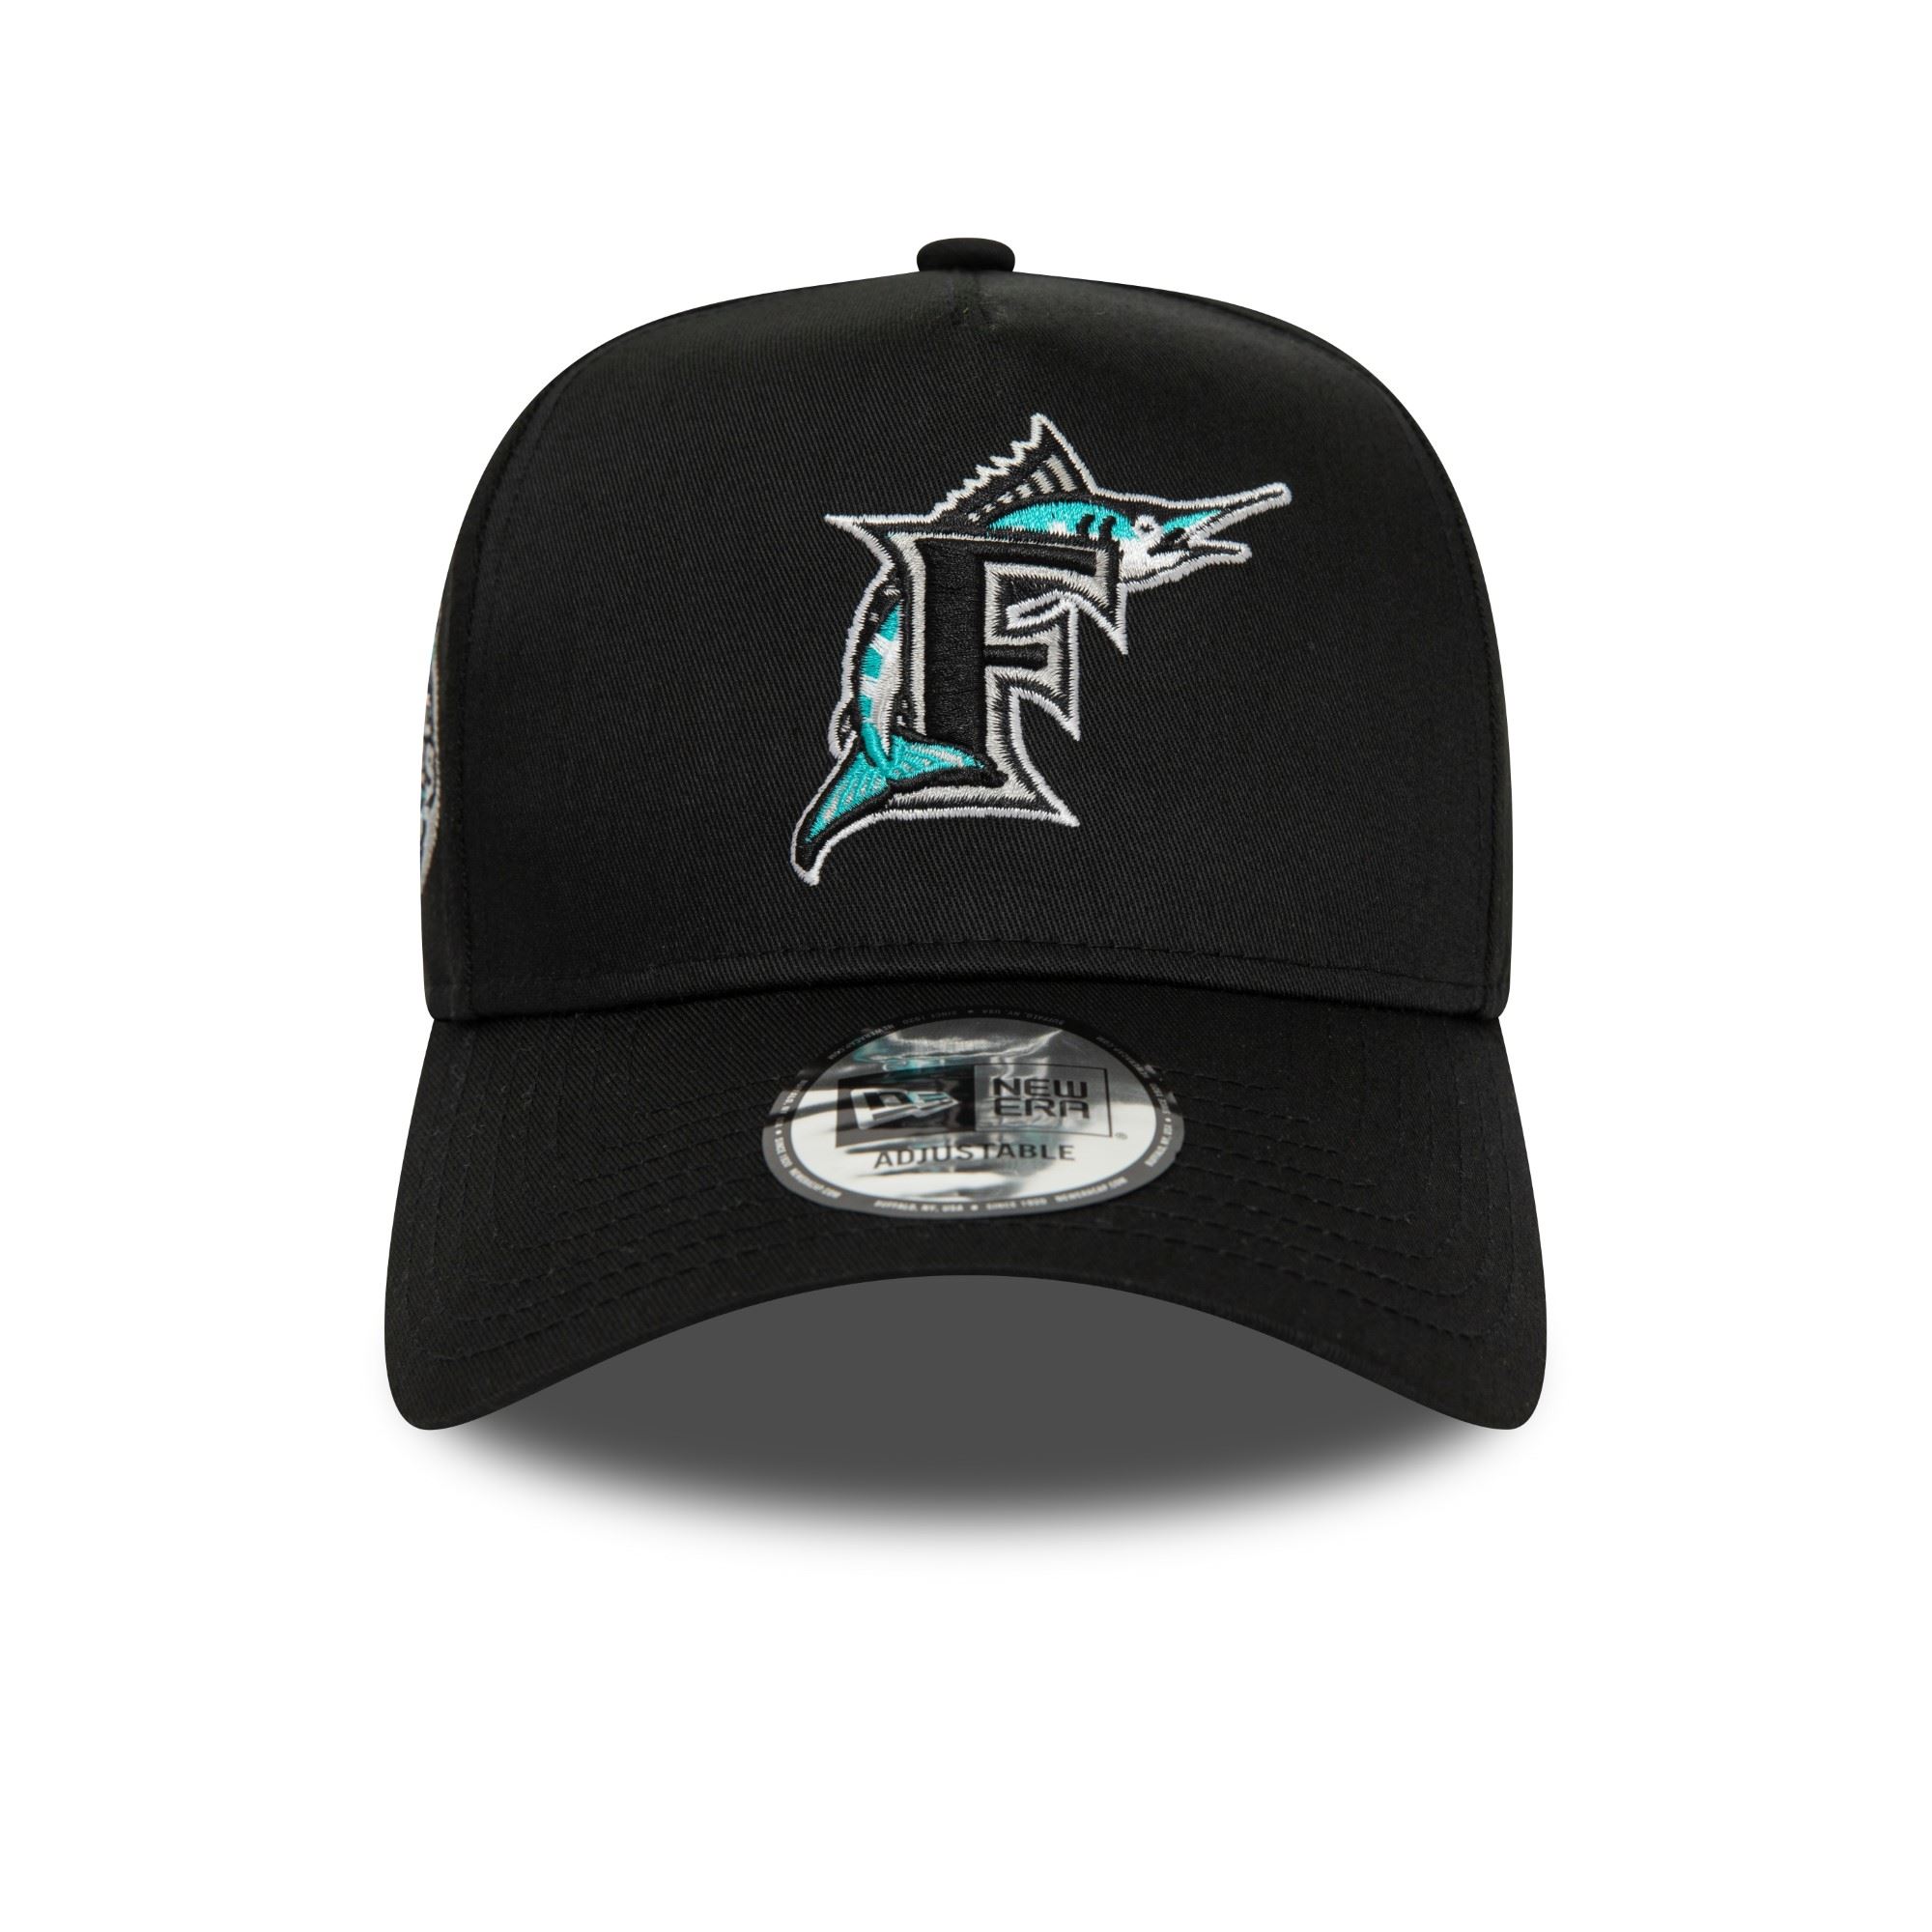 Florida Marlins MLB World Series 2003 100th Anniversary Black E-Frame Snapback Cap